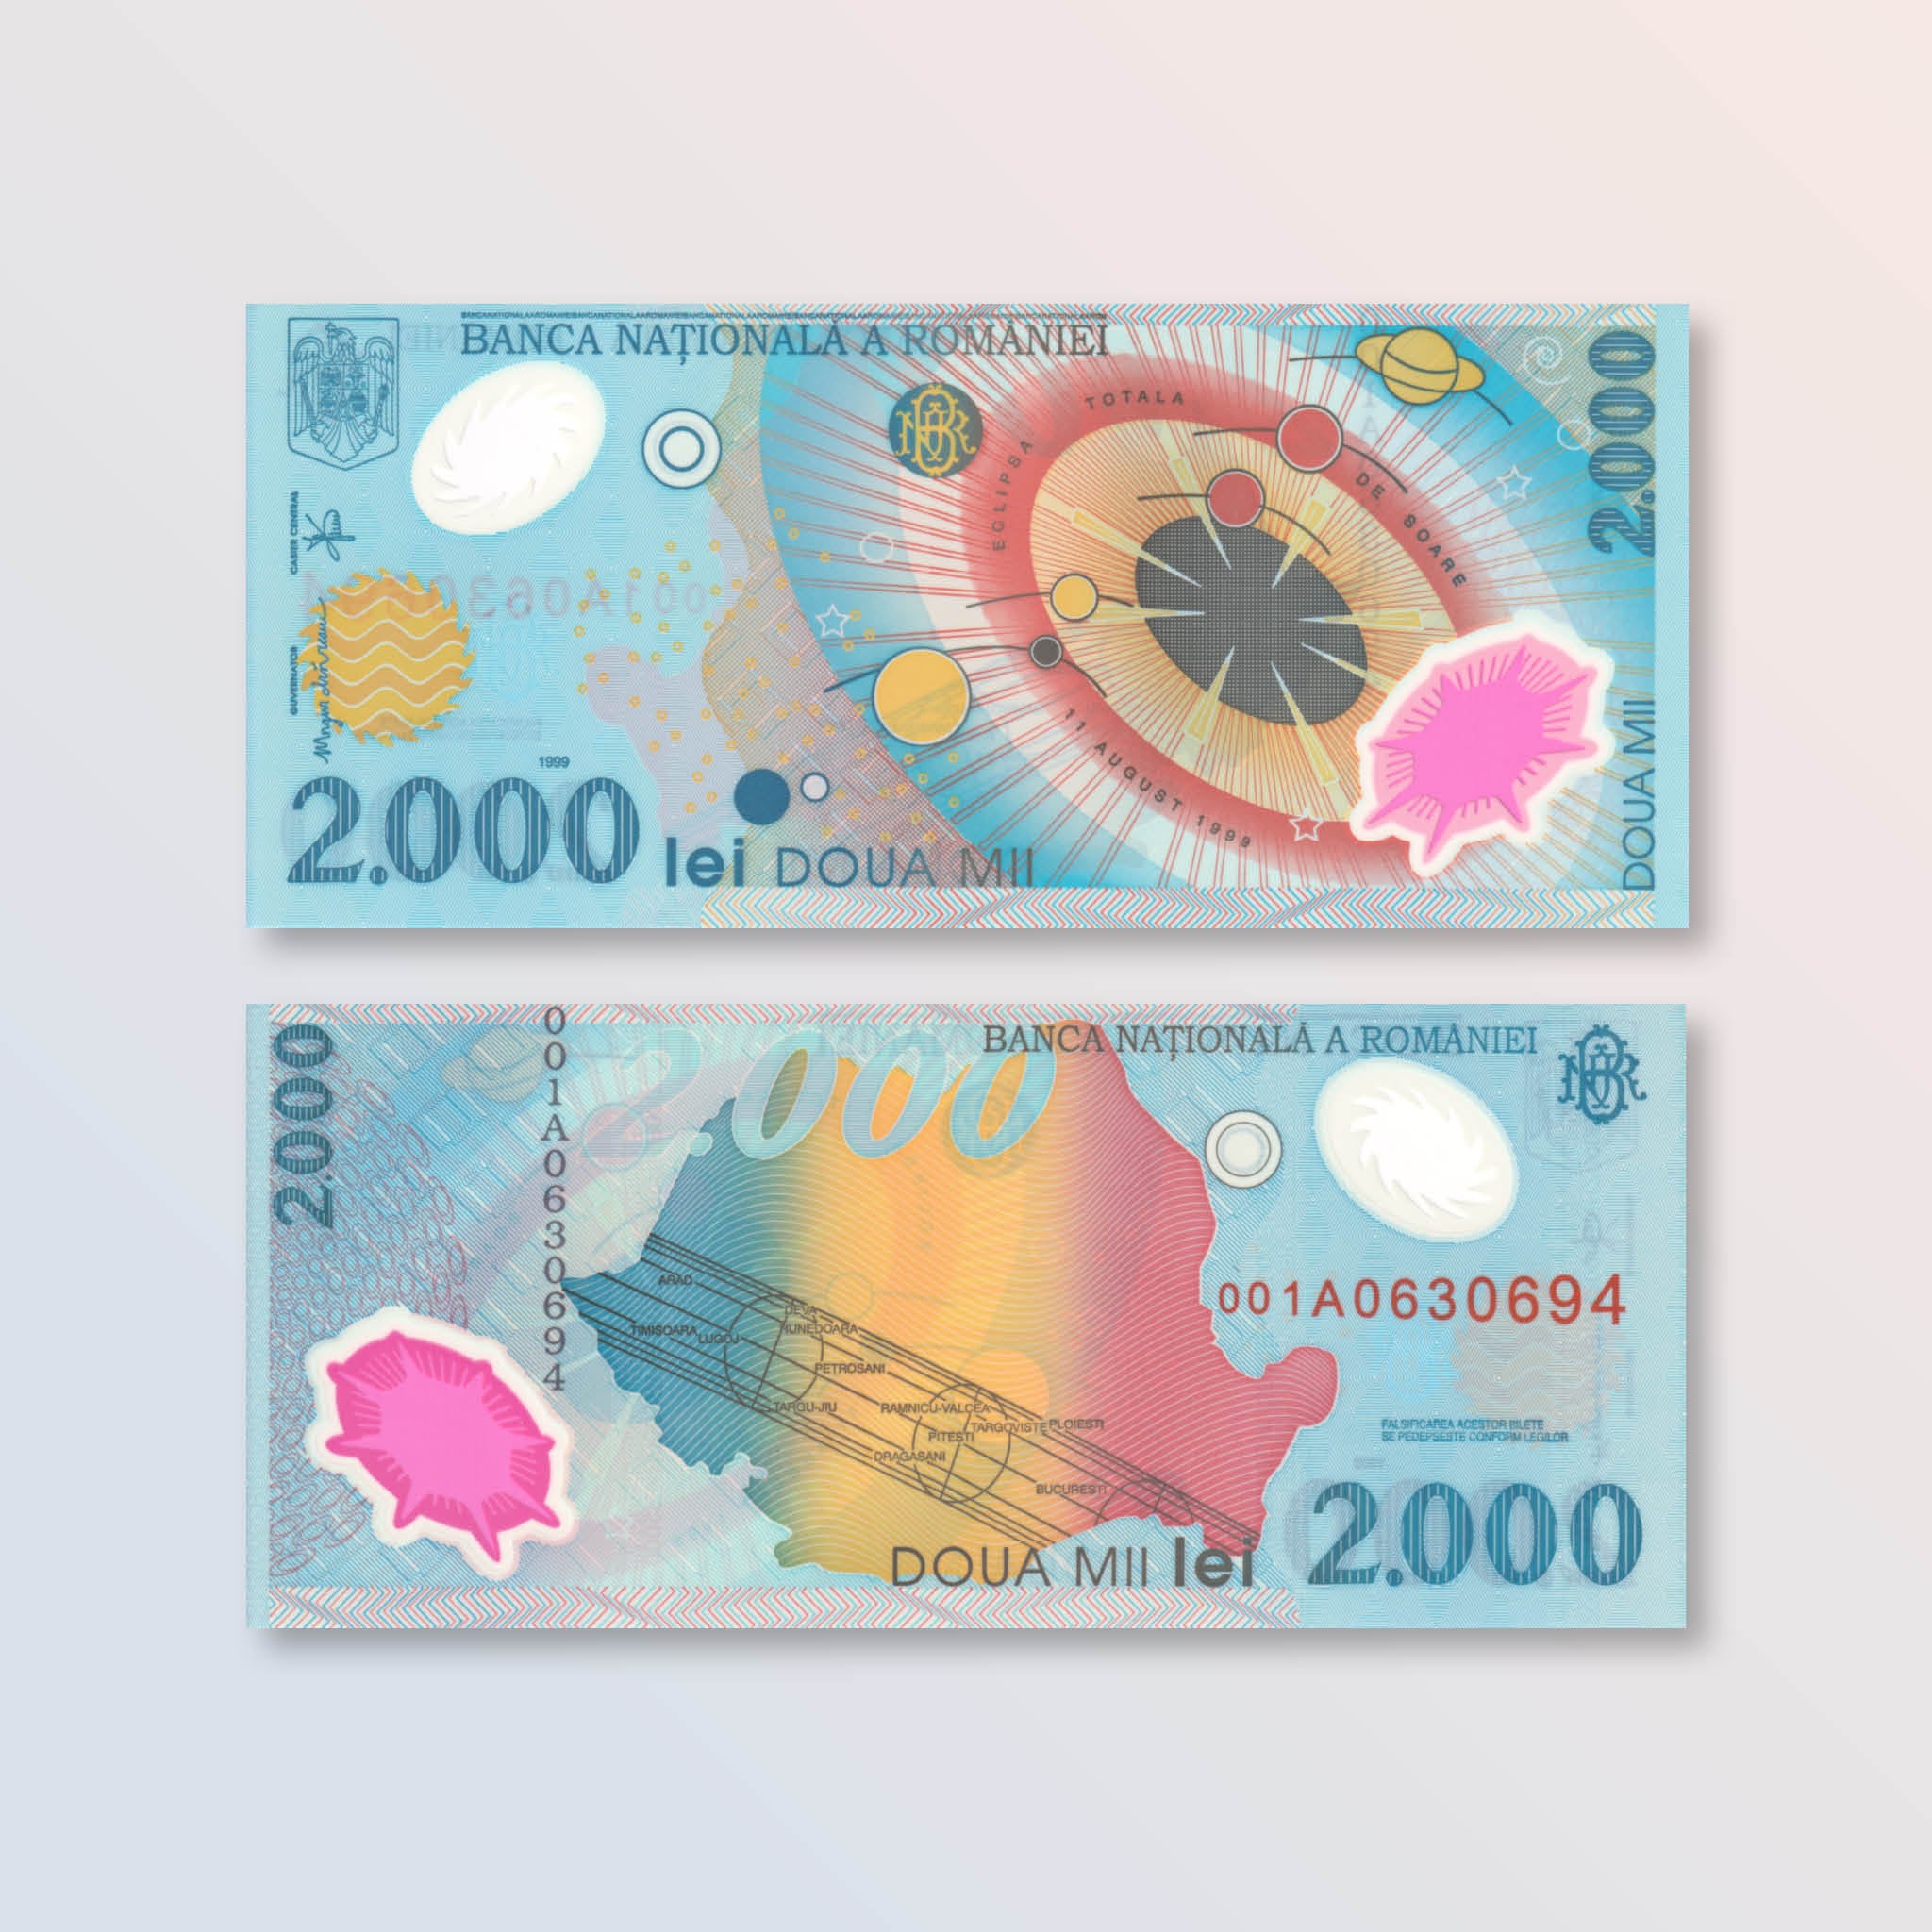 Romania 2000 Lei, 1999, B272a, P111a, UNC - Robert's World Money - World Banknotes